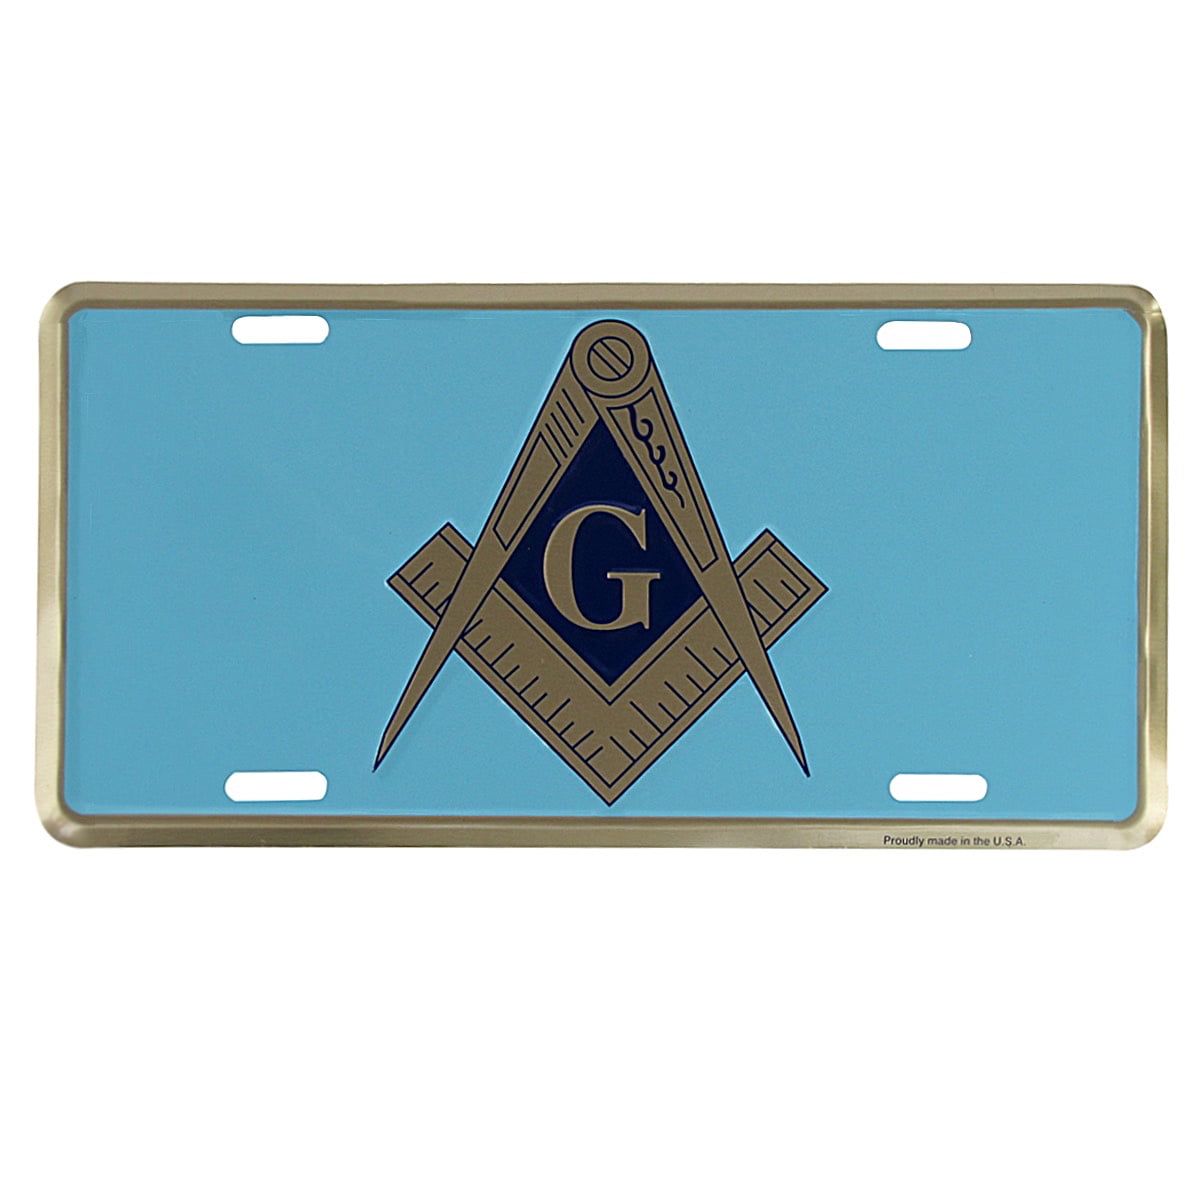 Masonic Space License Plate Mason Freemasonry Truck Auto Car Tag Emblem 